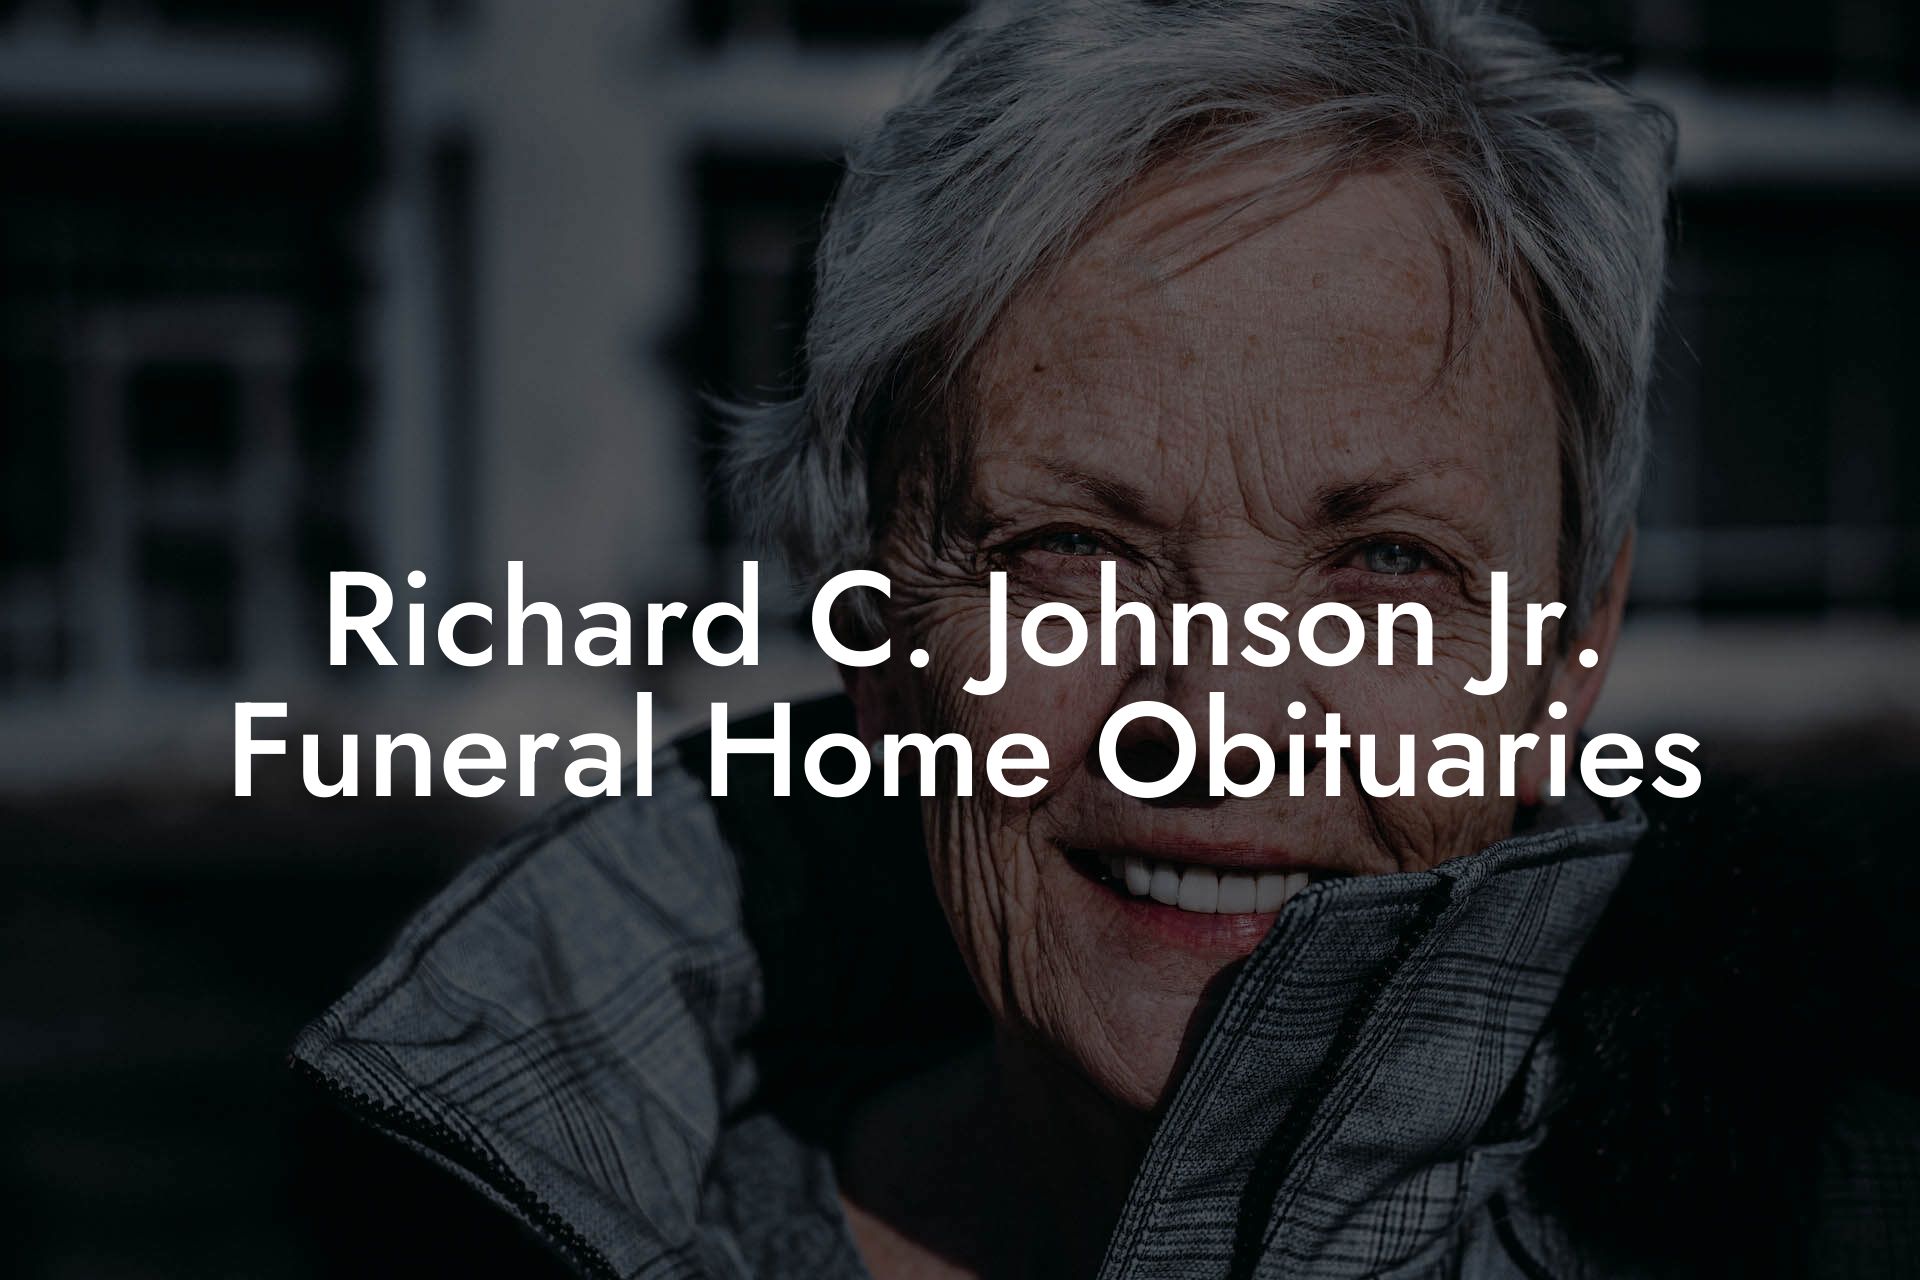 Richard C. Johnson Jr. Funeral Home Obituaries